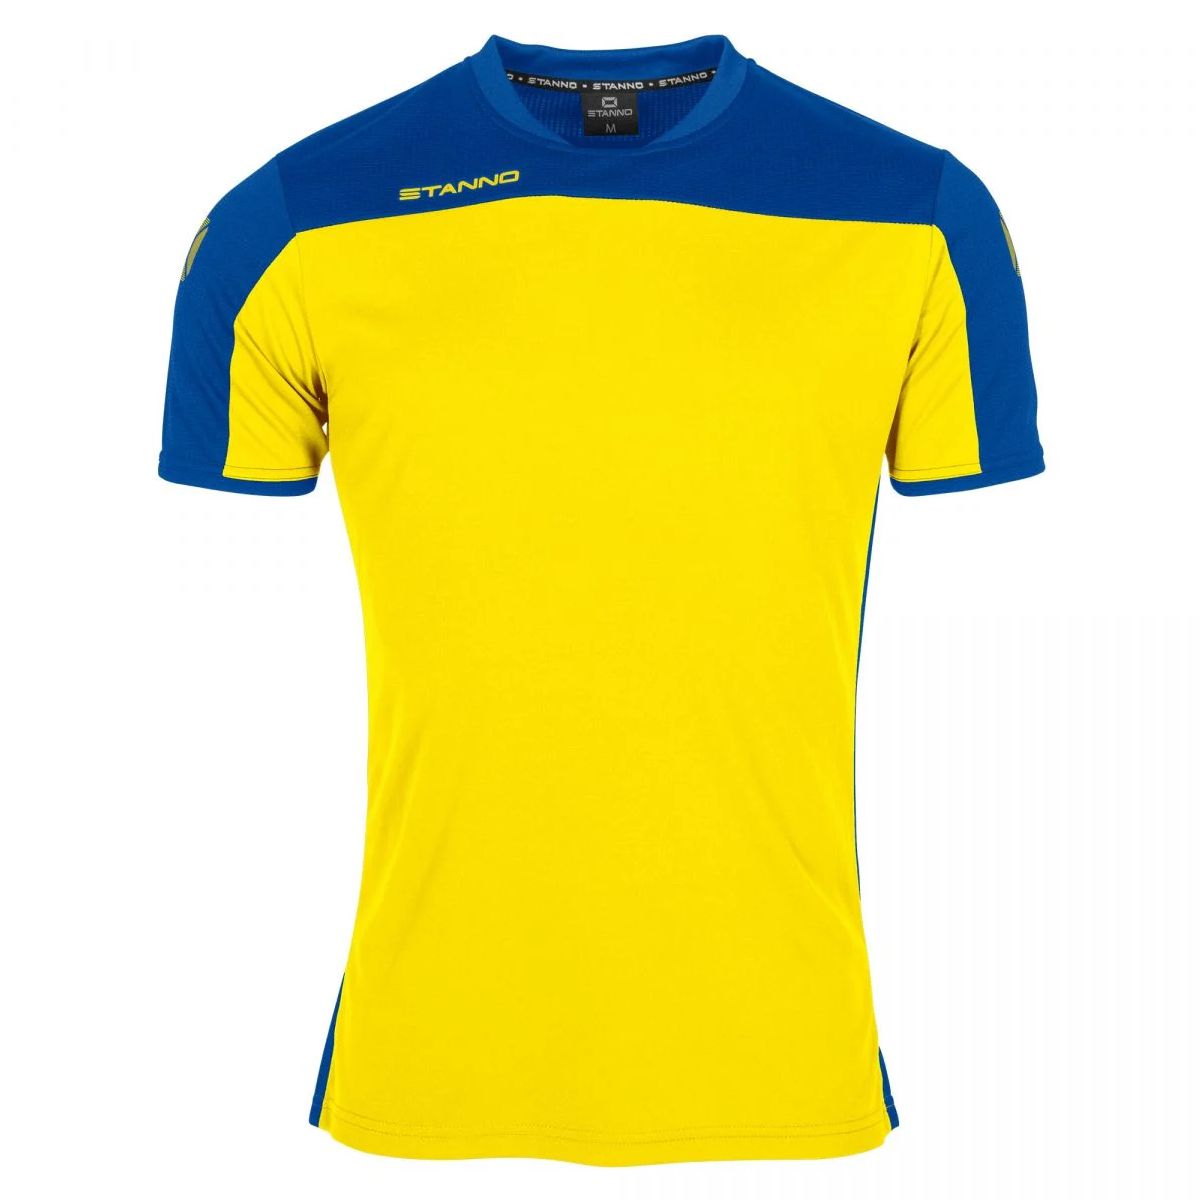 Stanno - Pride Shirt - Yellow & Royal